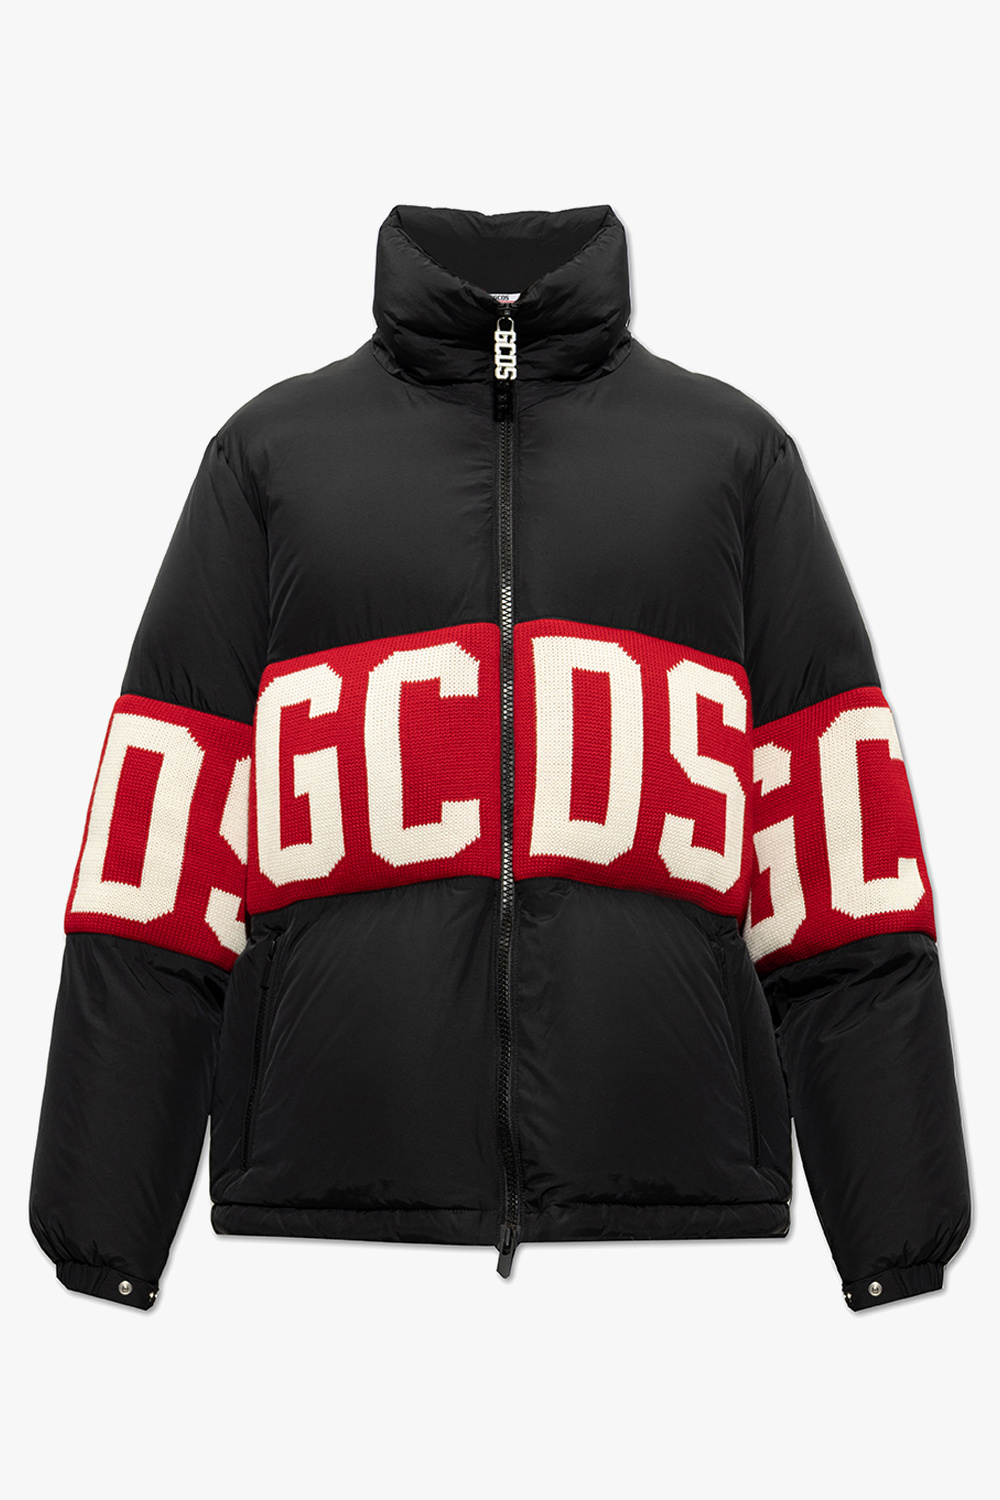 GCDS Down jacket with logo